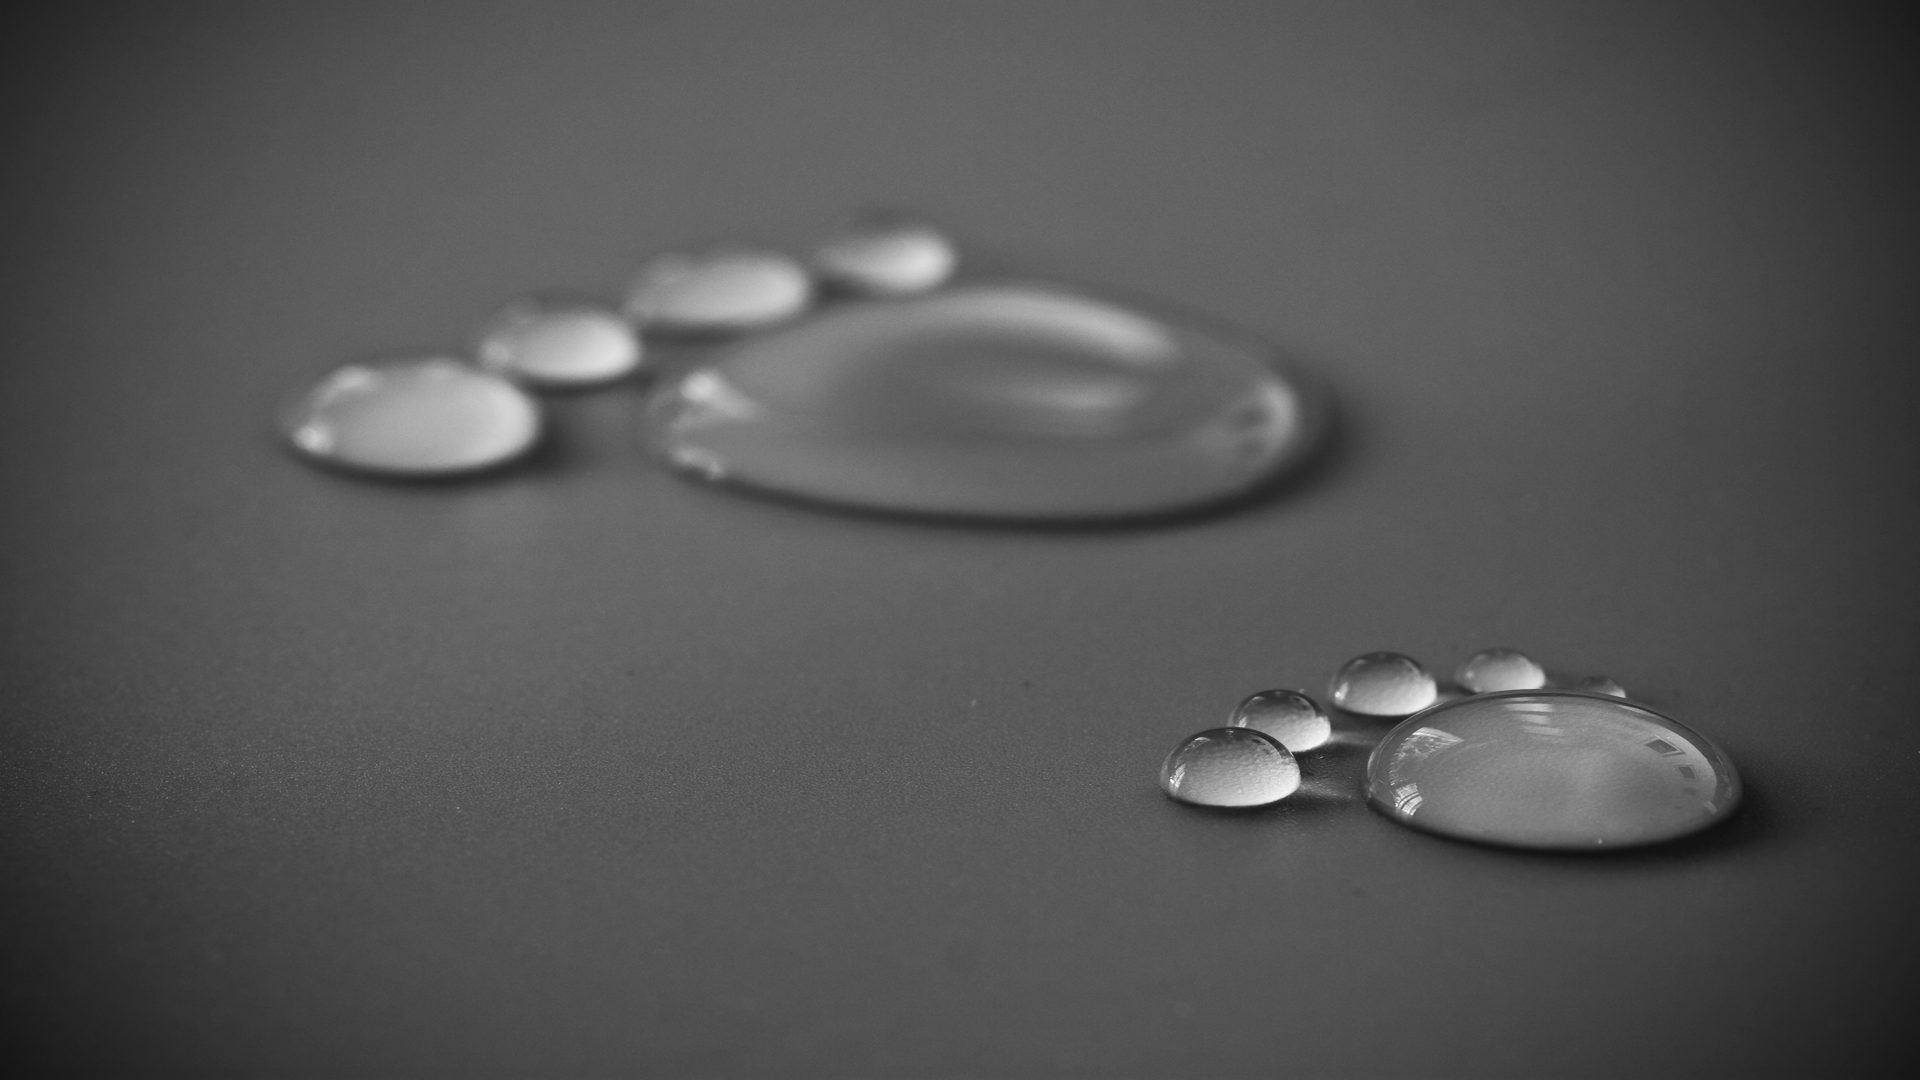 General 1920x1080 Linux Ubuntu GNOME monochrome liquid water drops closeup logo